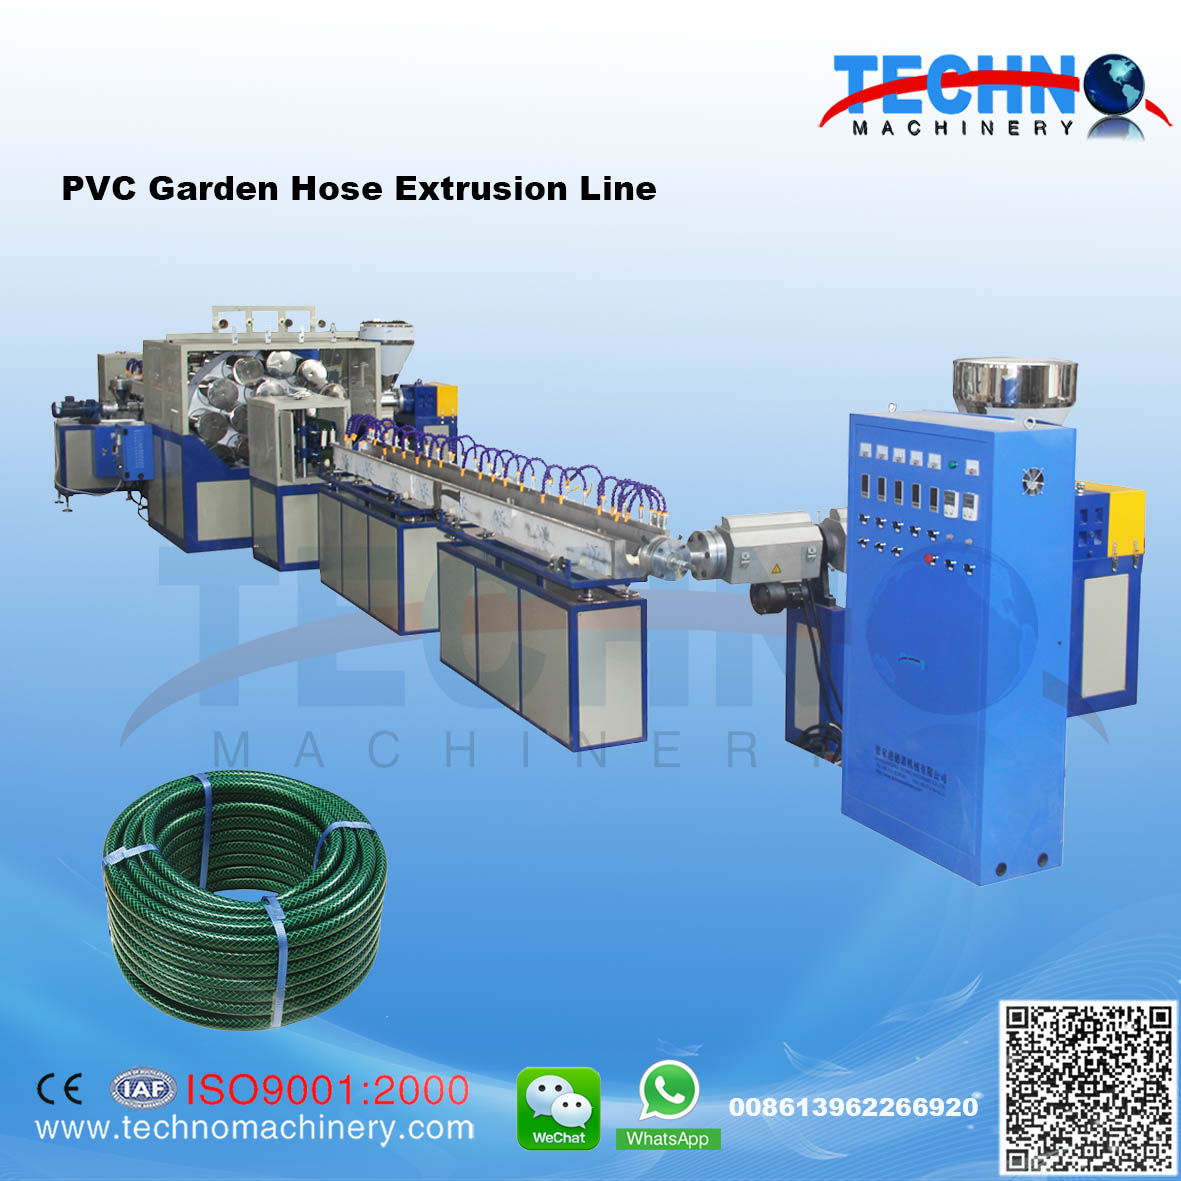 PVC Garden Hose Extrusion Line